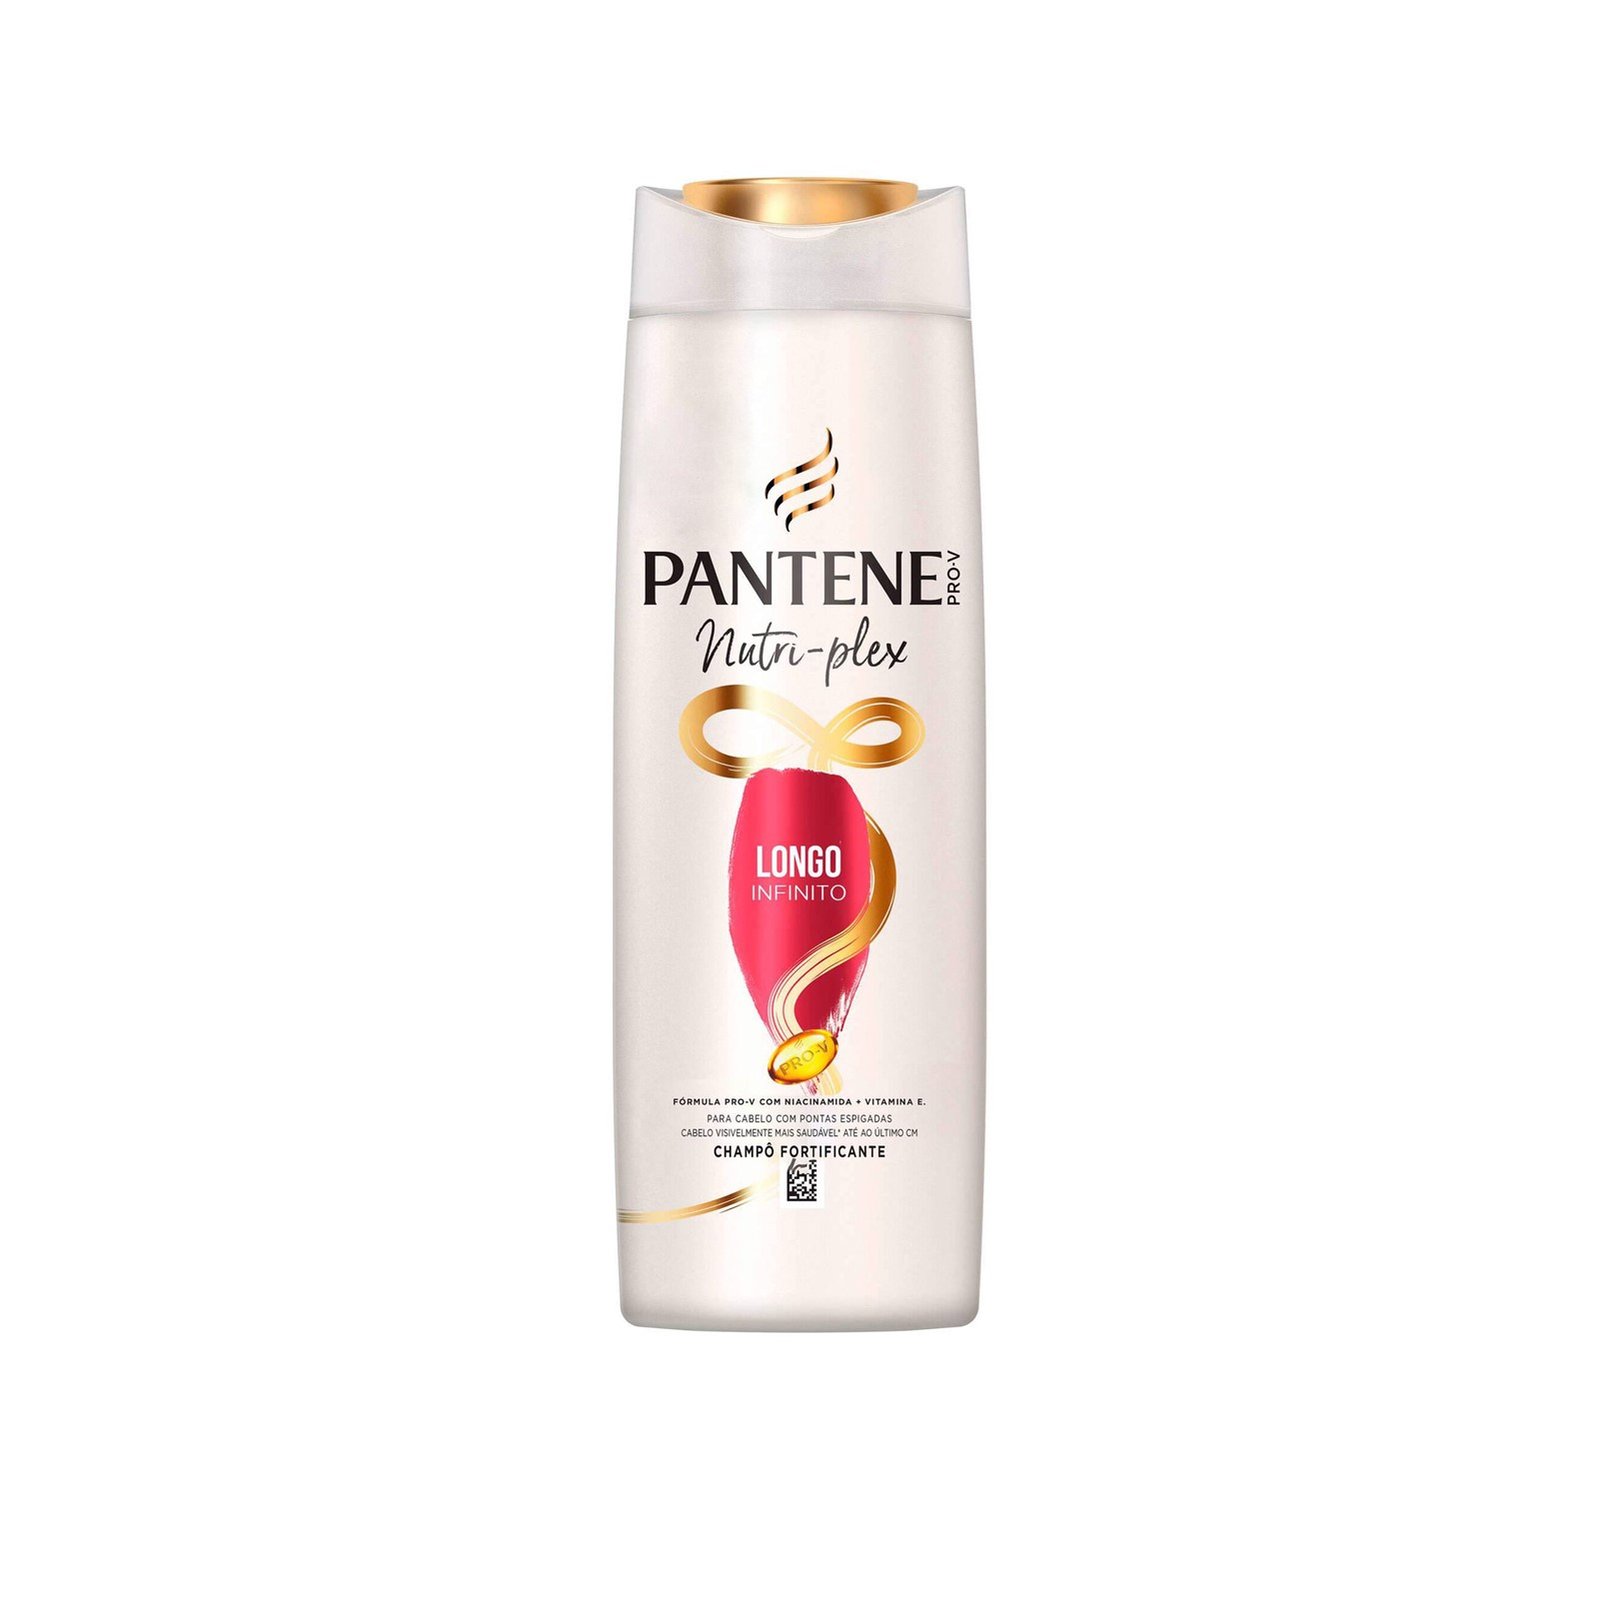 Pantene Pro-V Nutri-Plex Infinite Lenghts Shampoo 600ml